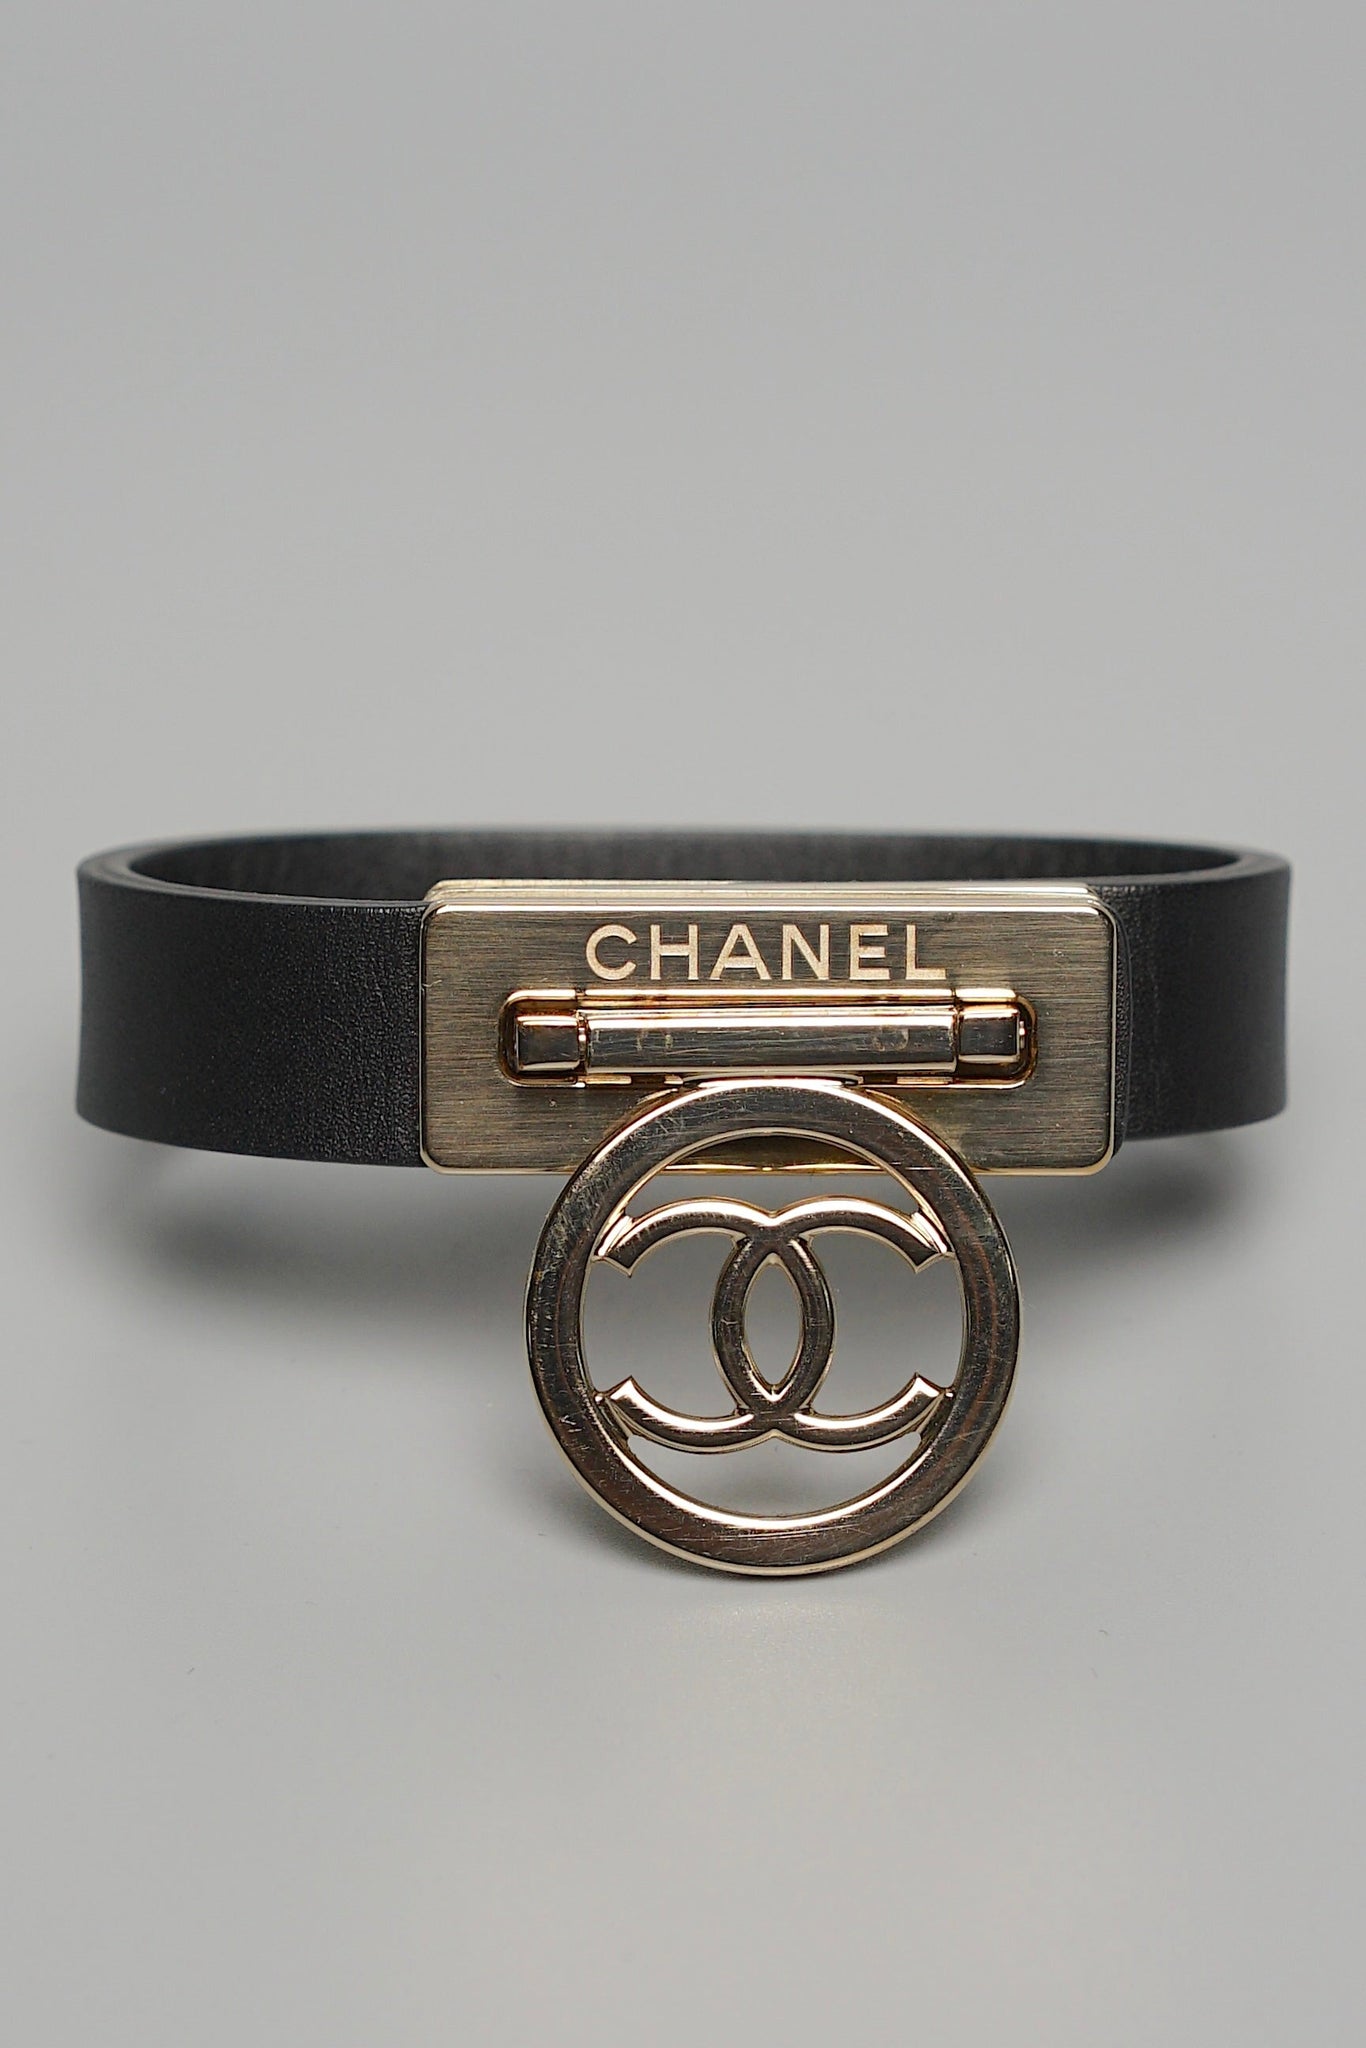 Chanel 19C Bracelet in Gold/Black